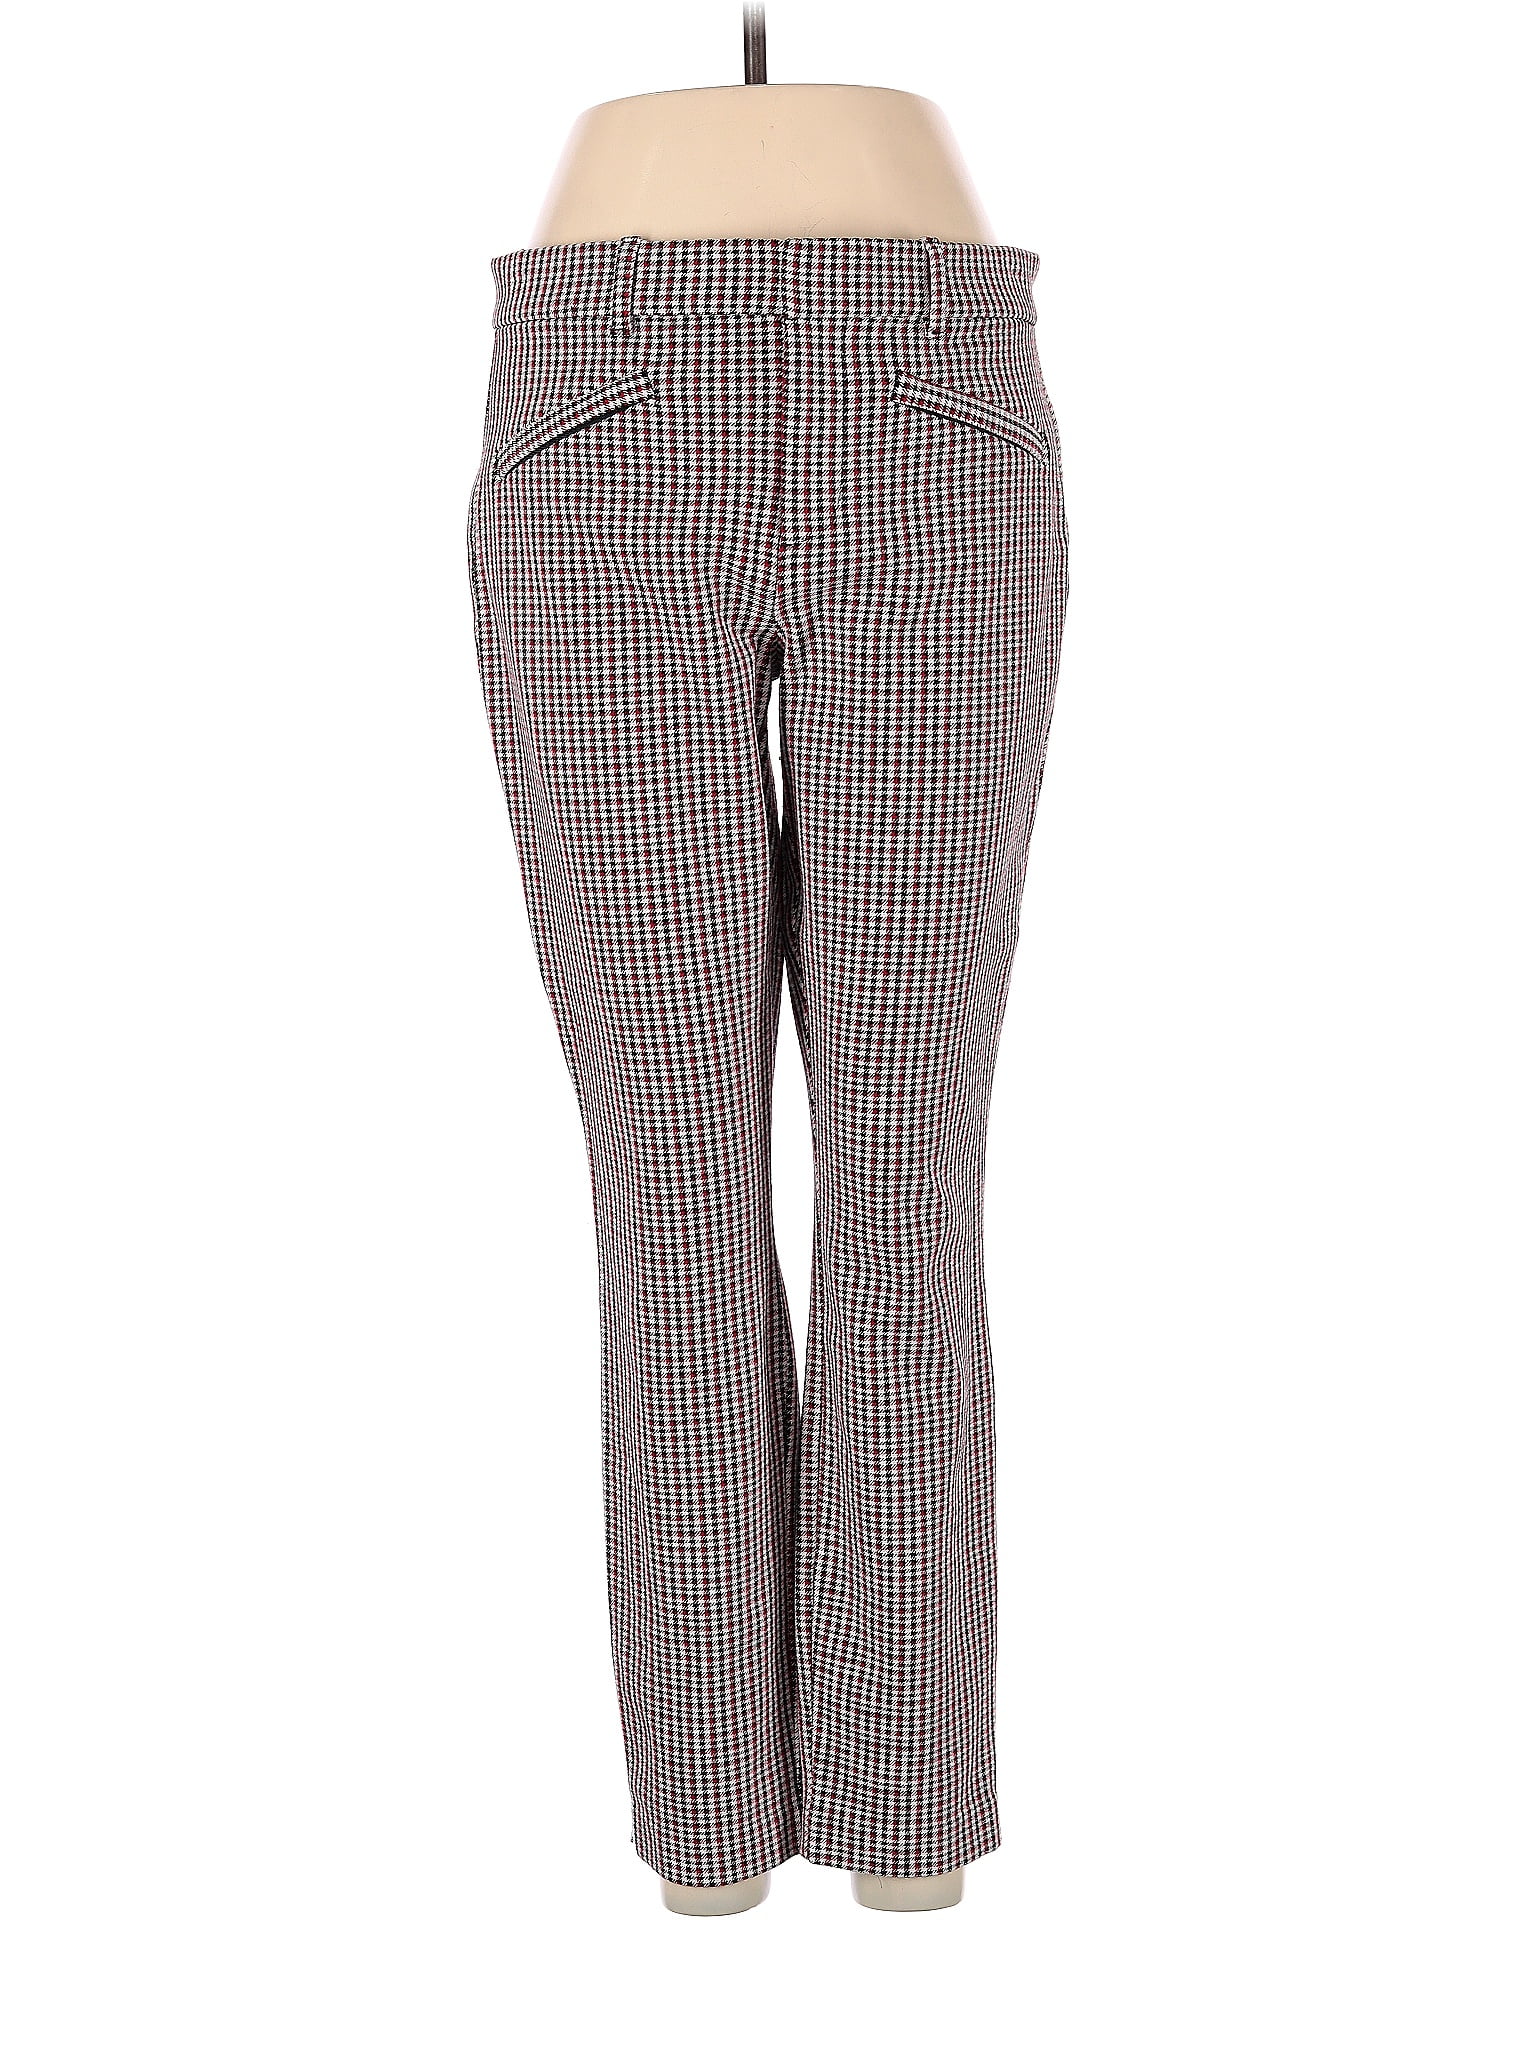 Gap Multi Color Brown Casual Pants Size 8 - 77% off | thredUP